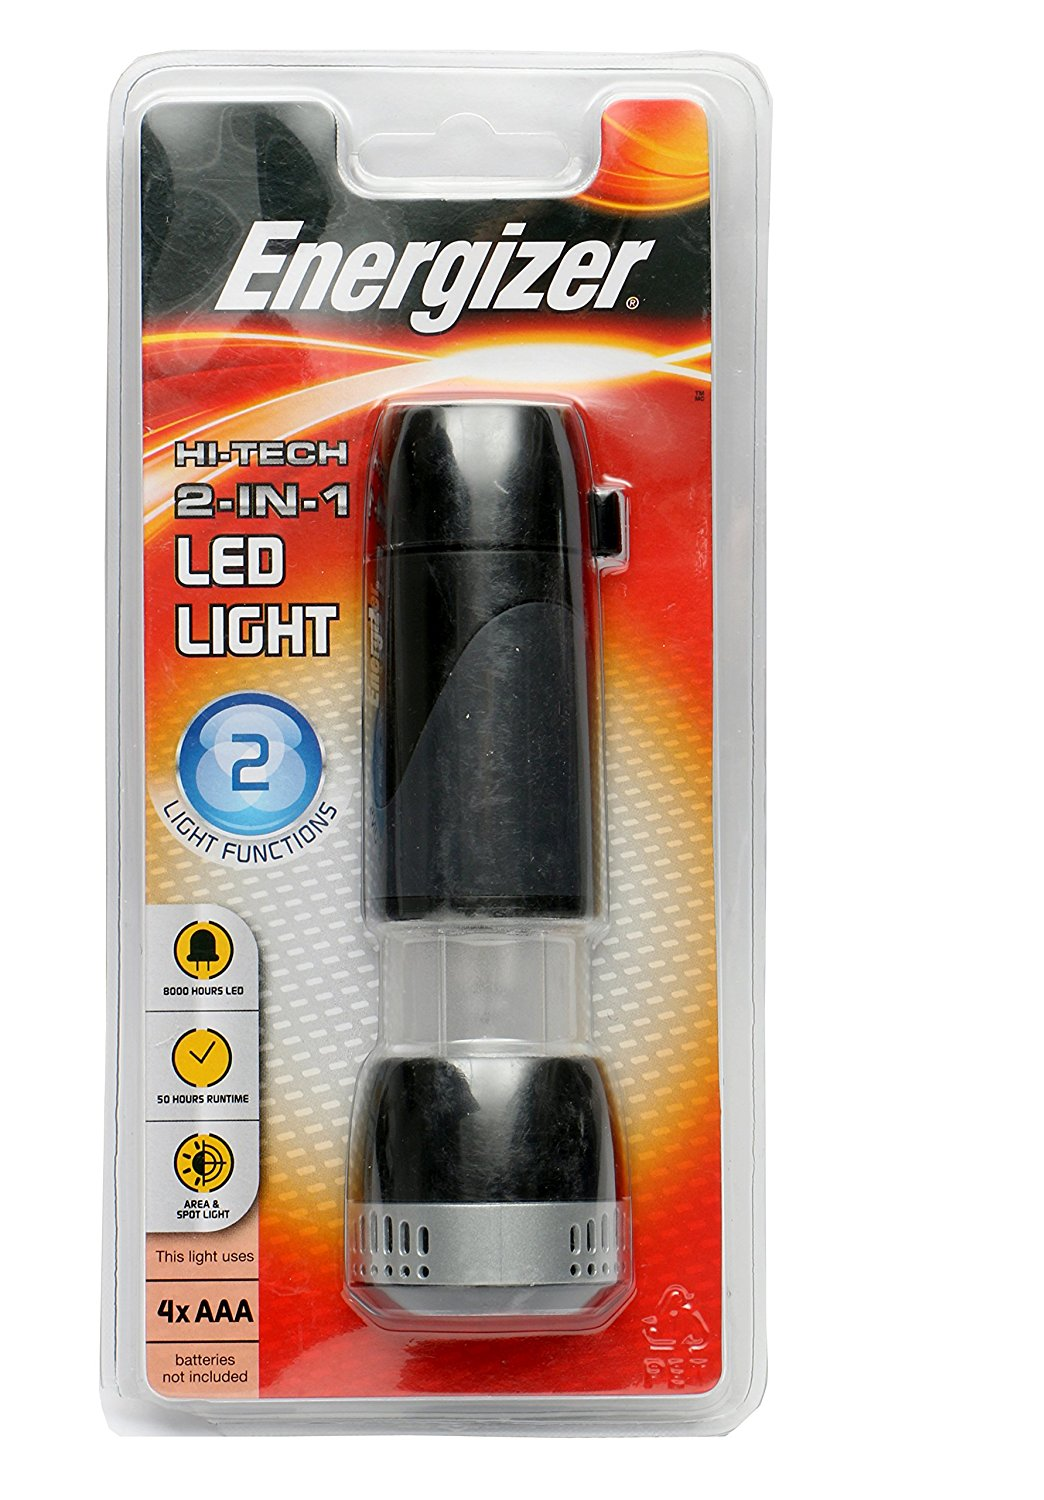 (Steal)Flipkart - Buy Energizer 2 in 1 Flash Light Lantern Torches (Black) for just Rs.138